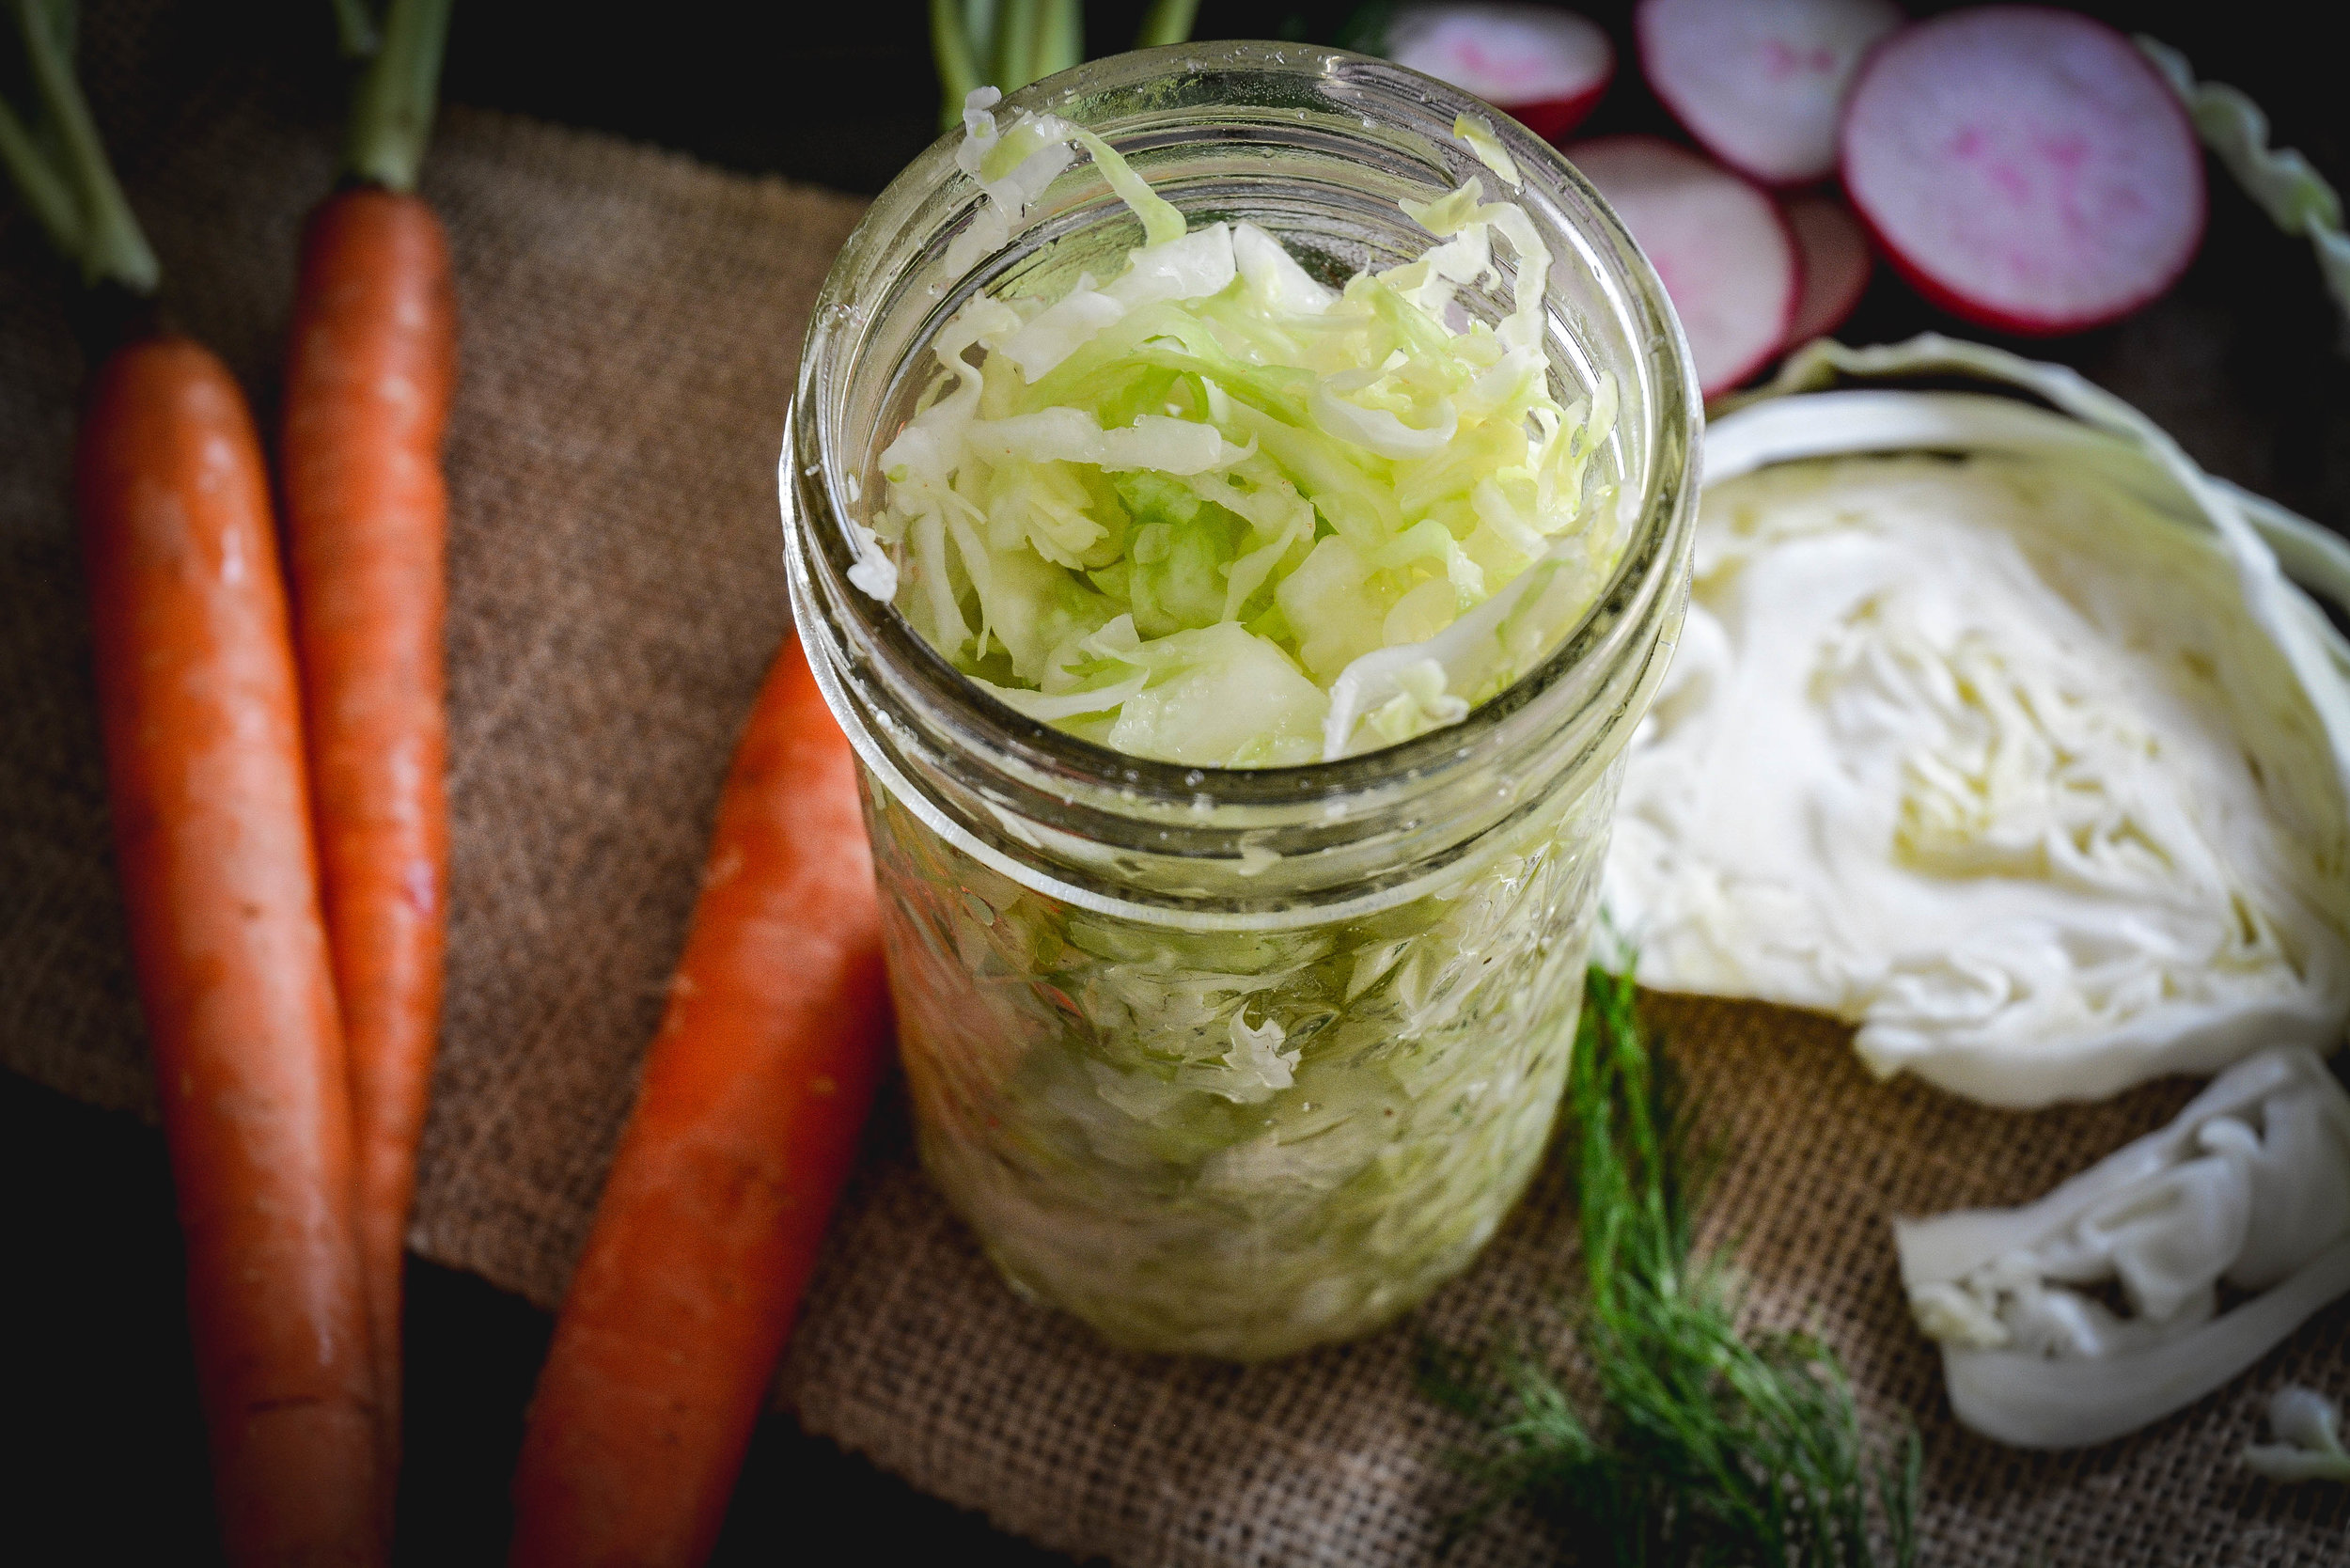 Sauerkraut in jar next to carrots, cabbage and radishes